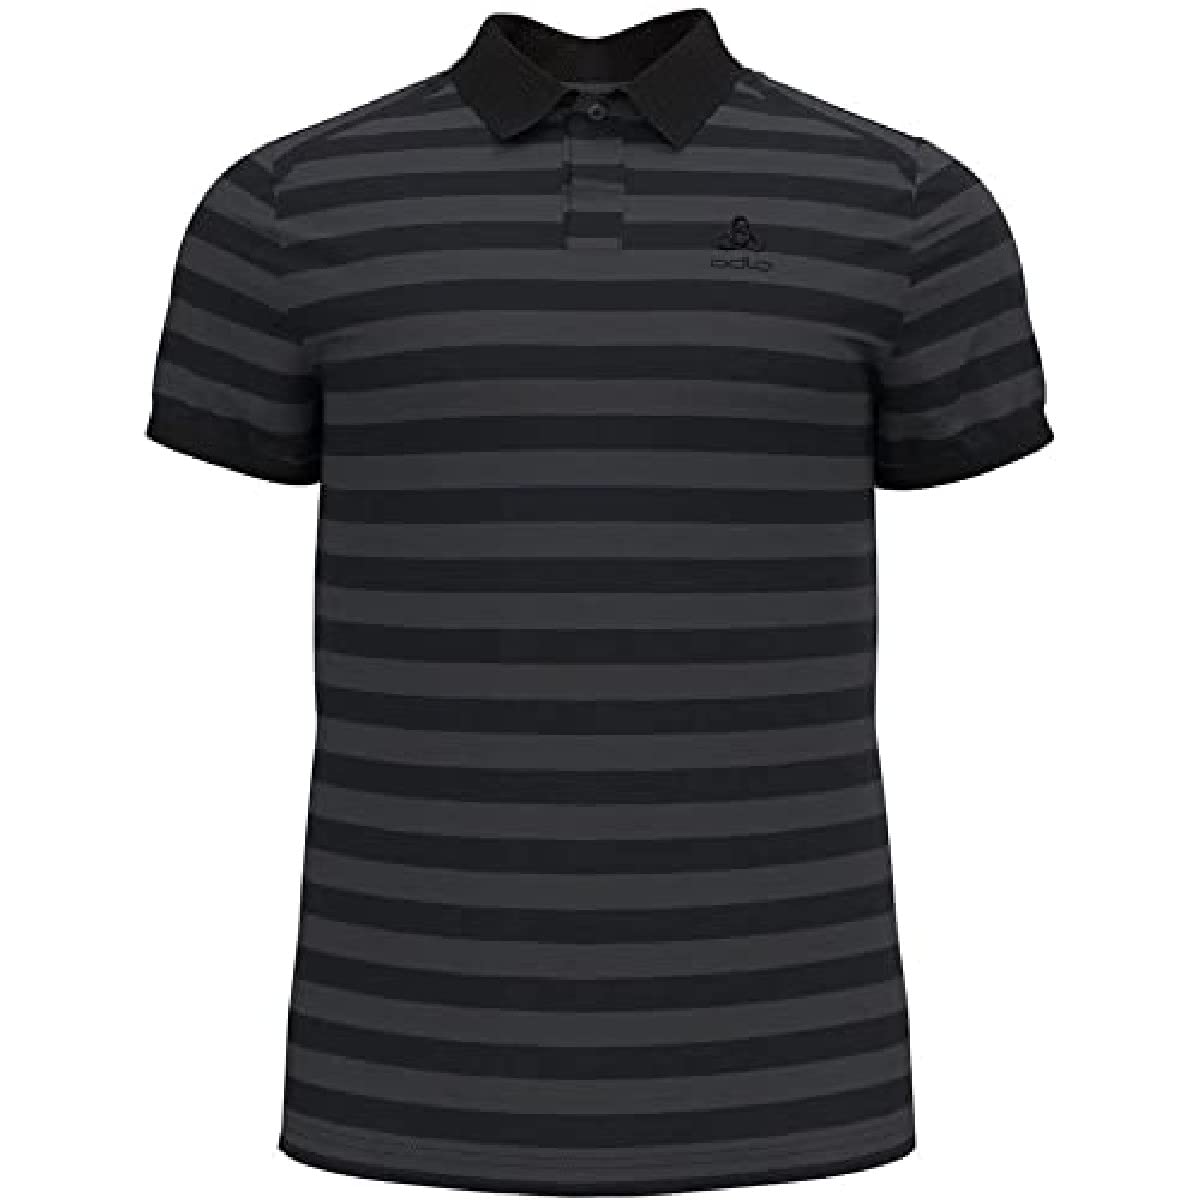 Odlo Herren Polo Shirt CONCORD, black - new odlo graphite grey, M